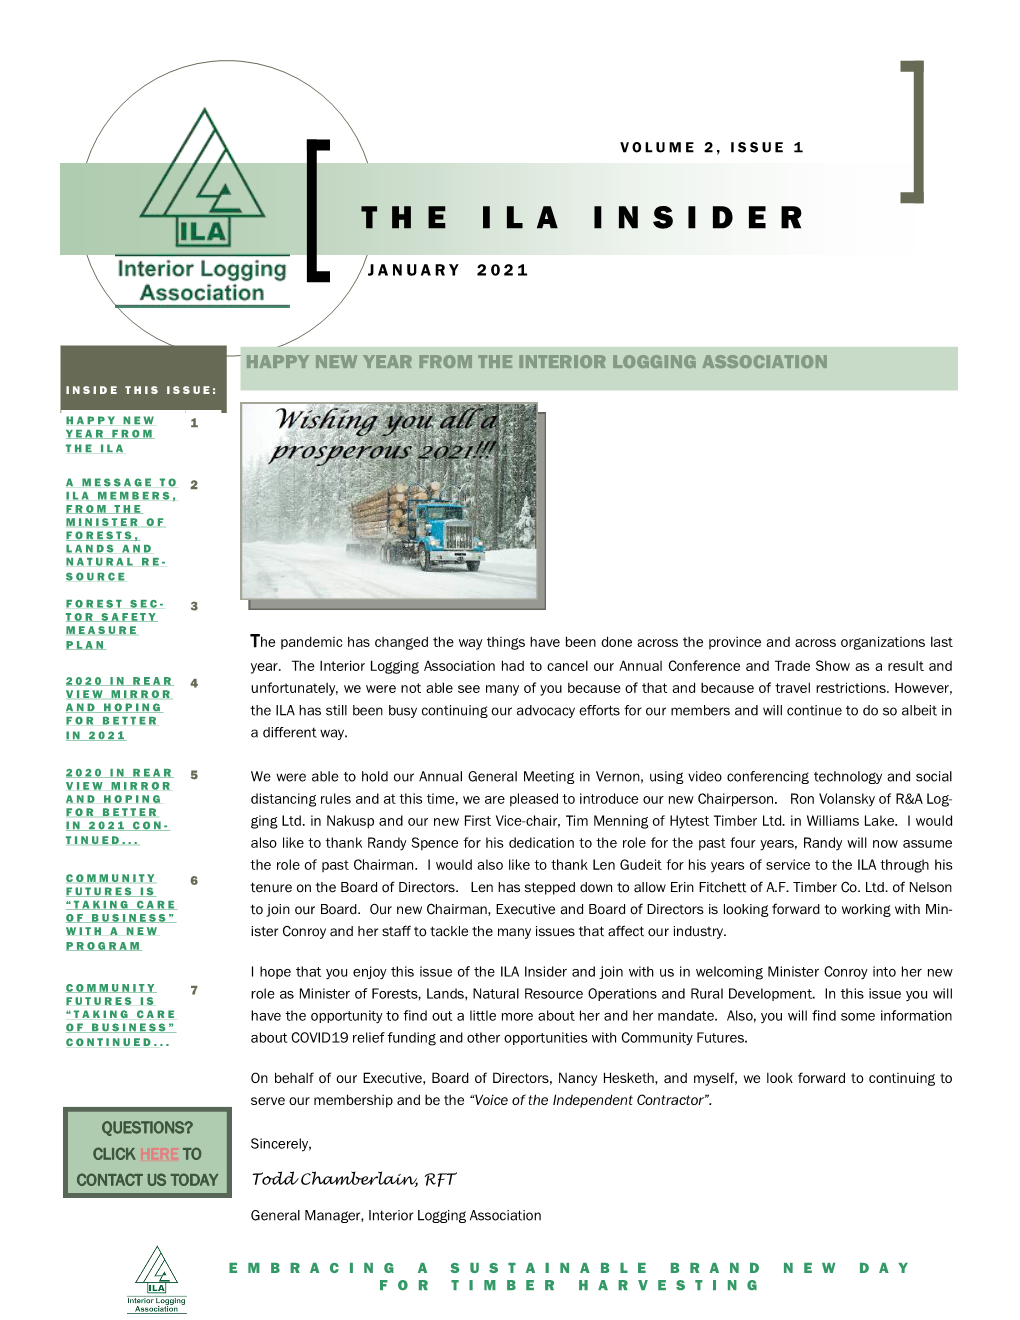 ILA Newsletter Volume 2 Issue 1 January 2021